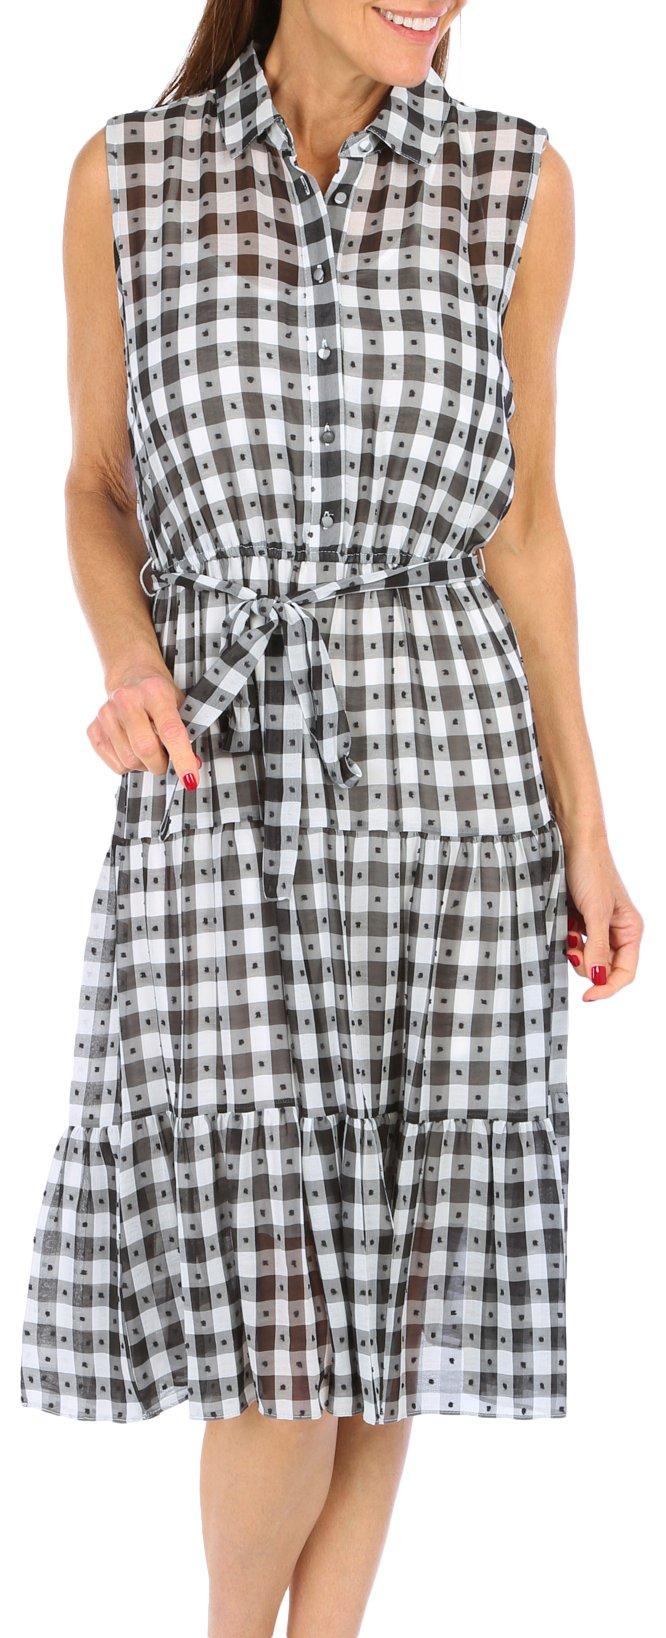 Nanette Lepore Womens Checkered Tiered Sleeveless Dress